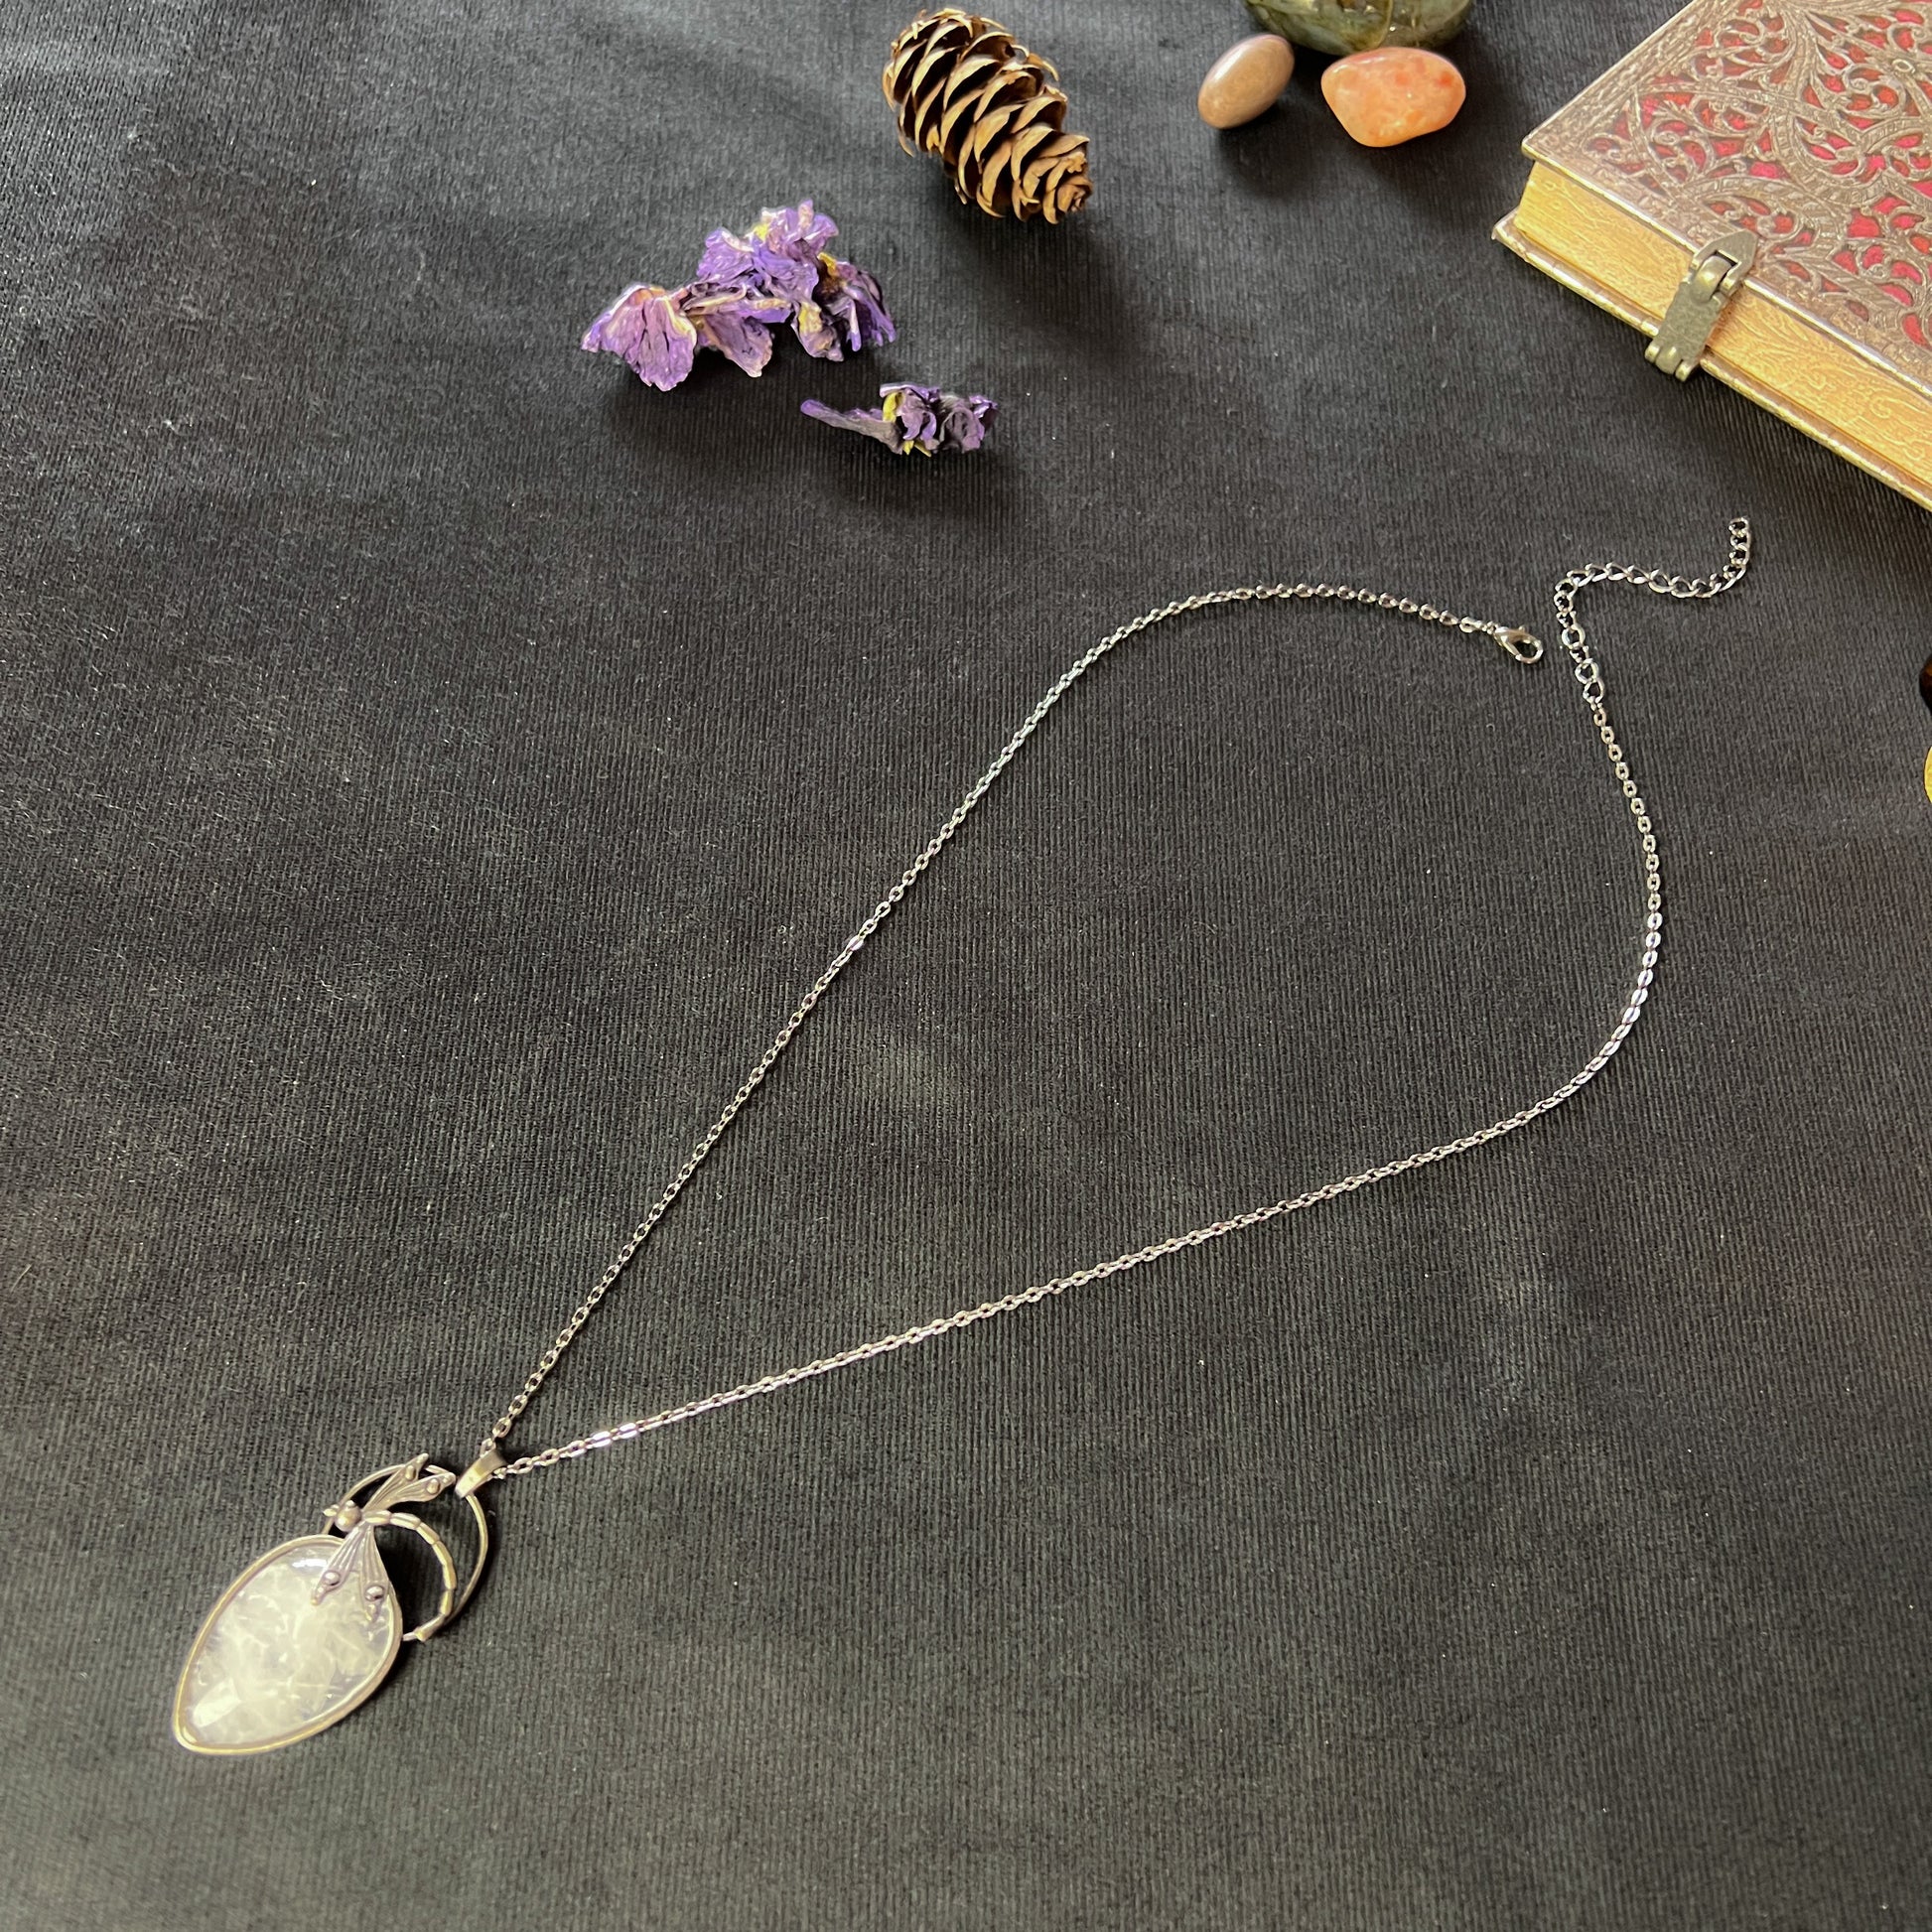 Dragonfly gemstone necklace quartz, lapis lazuli or amethyst pagan witch pendant fantasy fairy necklace crystal jewelry